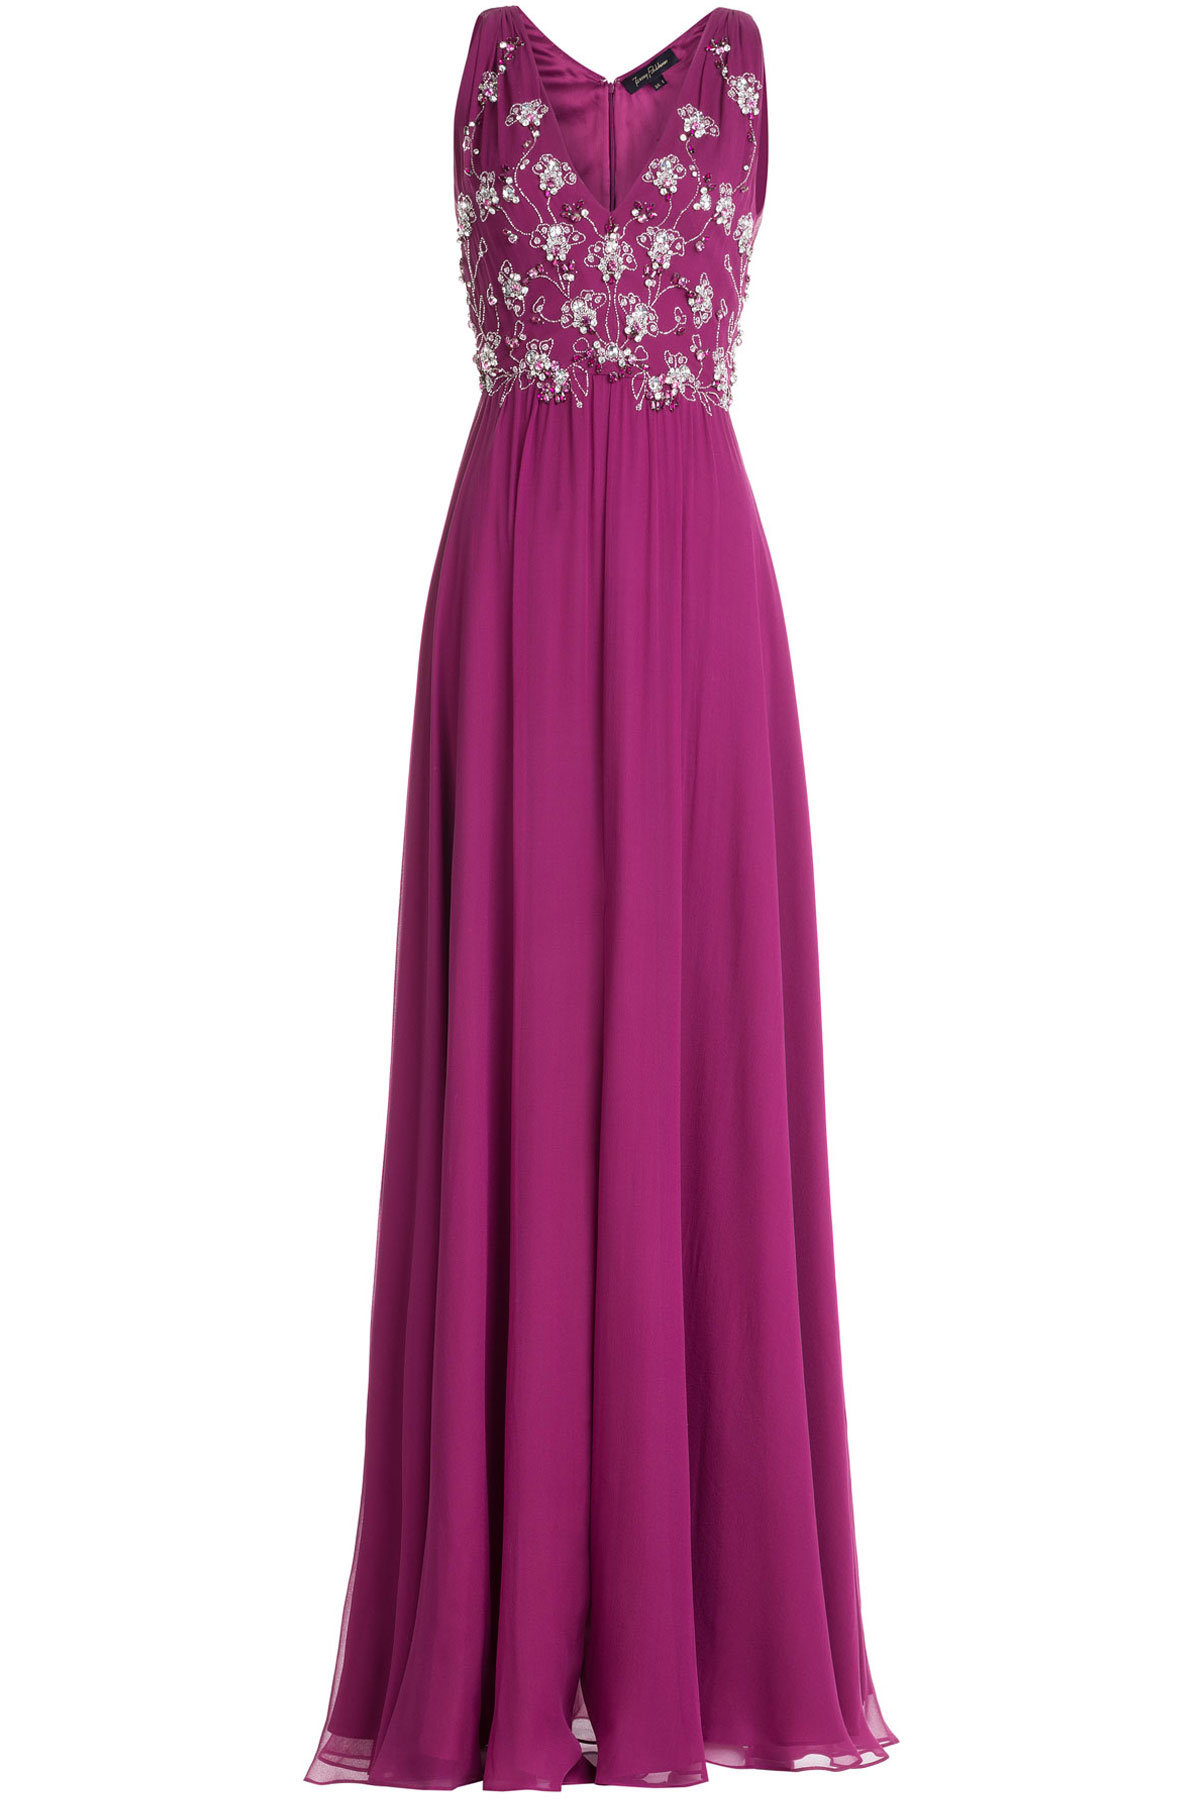 Jenny Packham - Embellished Silk Evening Gown